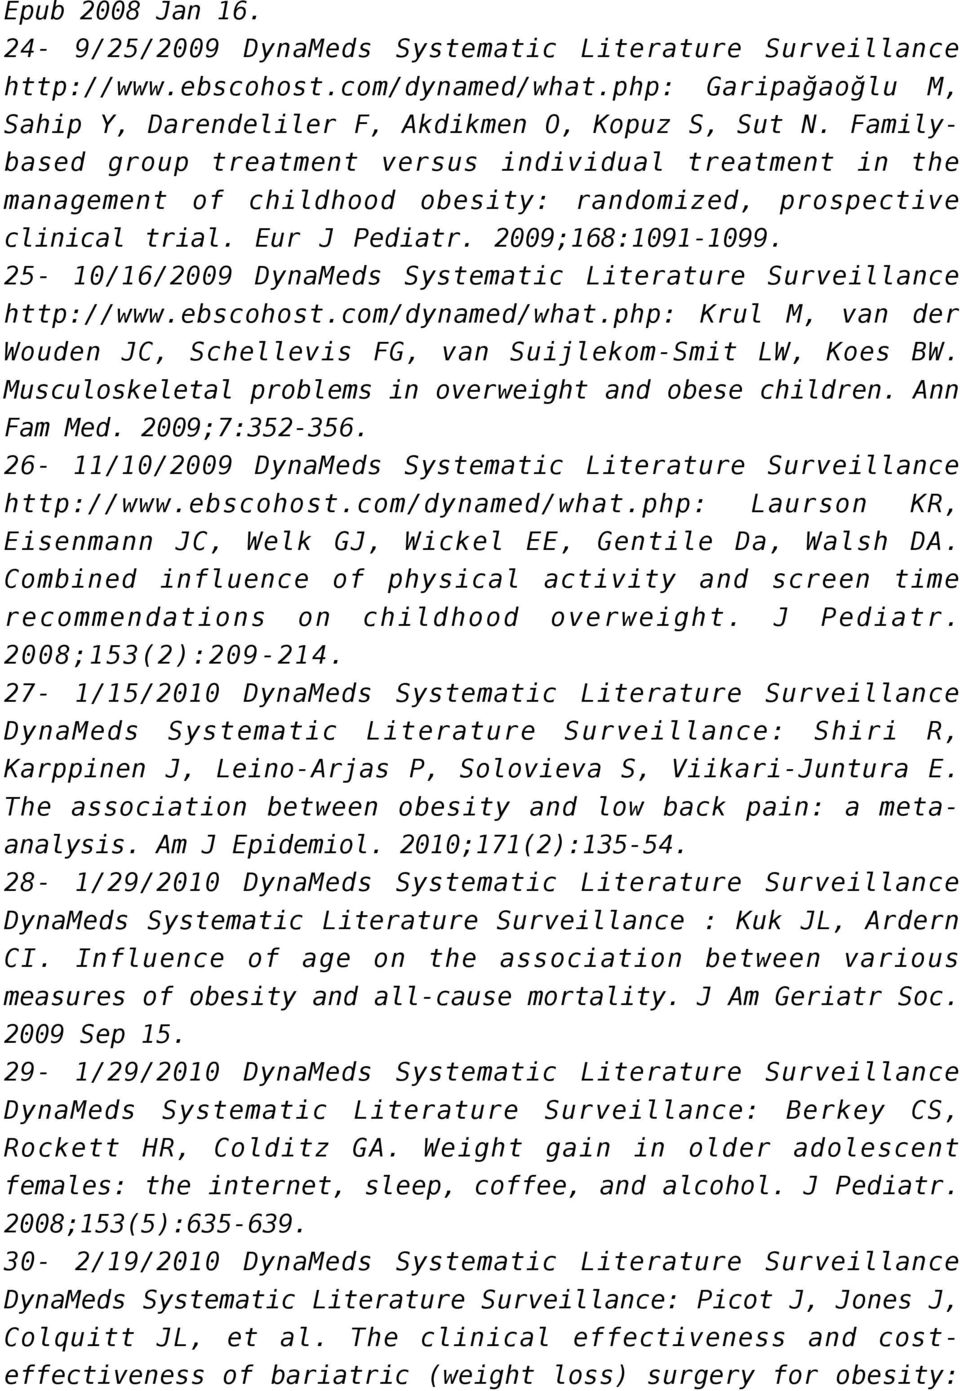 25-10/16/2009 DynaMeds Systematic Literature Surveillance http://www.ebscohost.com/dynamed/what.php: Krul M, van der Wouden JC, Schellevis FG, van Suijlekom-Smit LW, Koes BW.